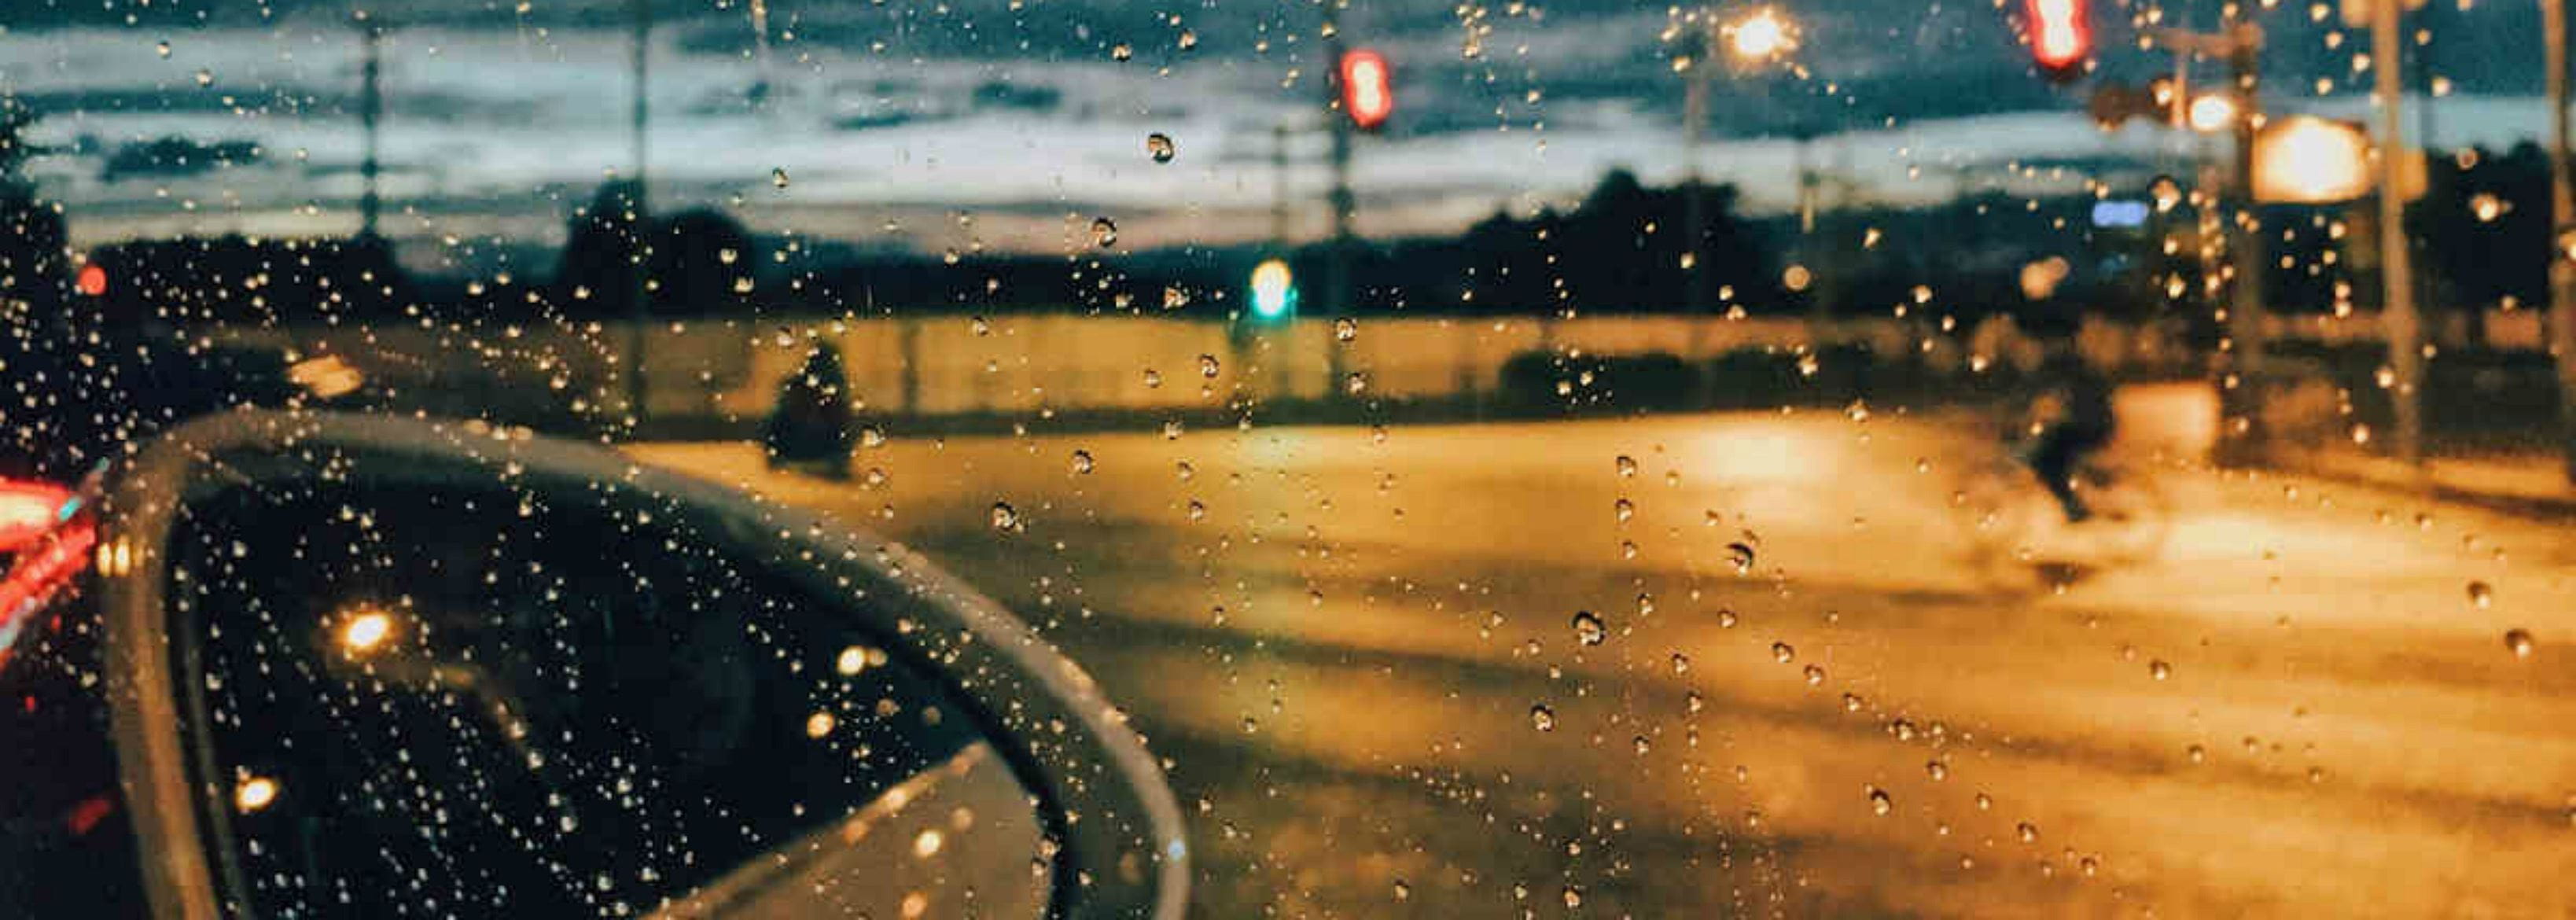 Car's mirror - rainy street